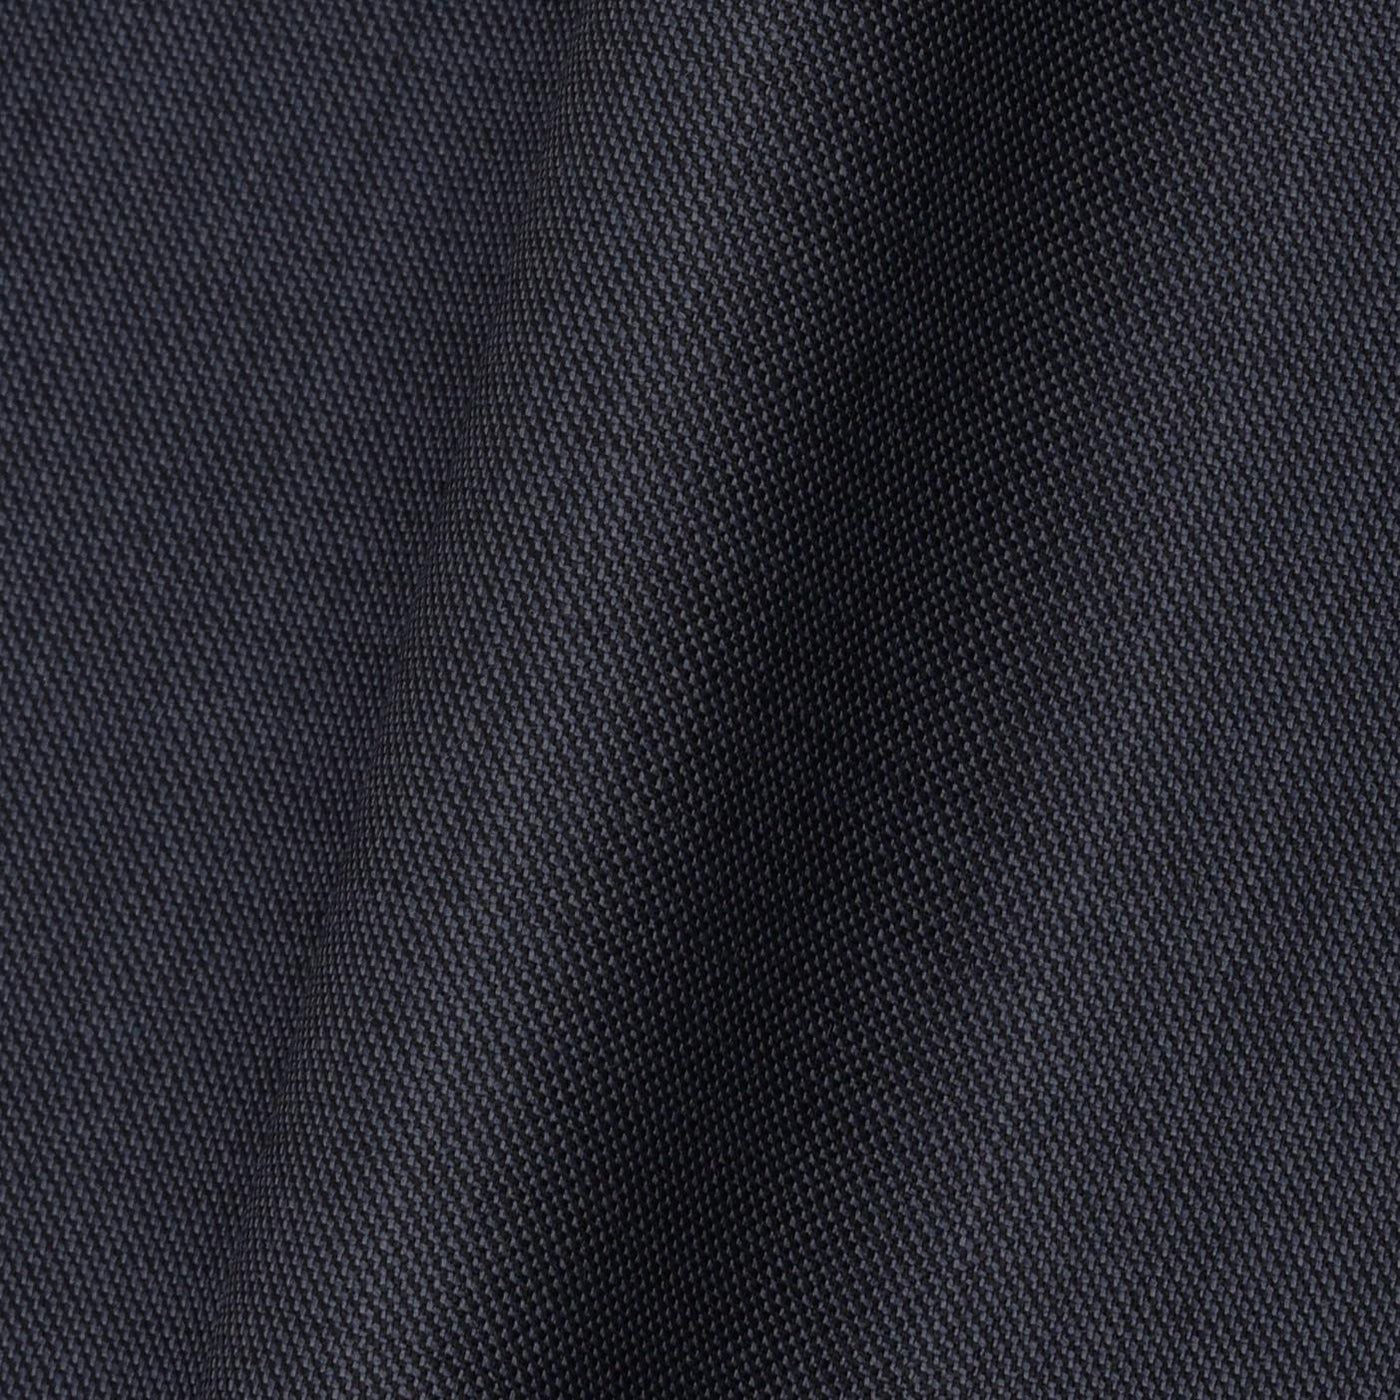 Zegna Winter Fabric #2630/0017